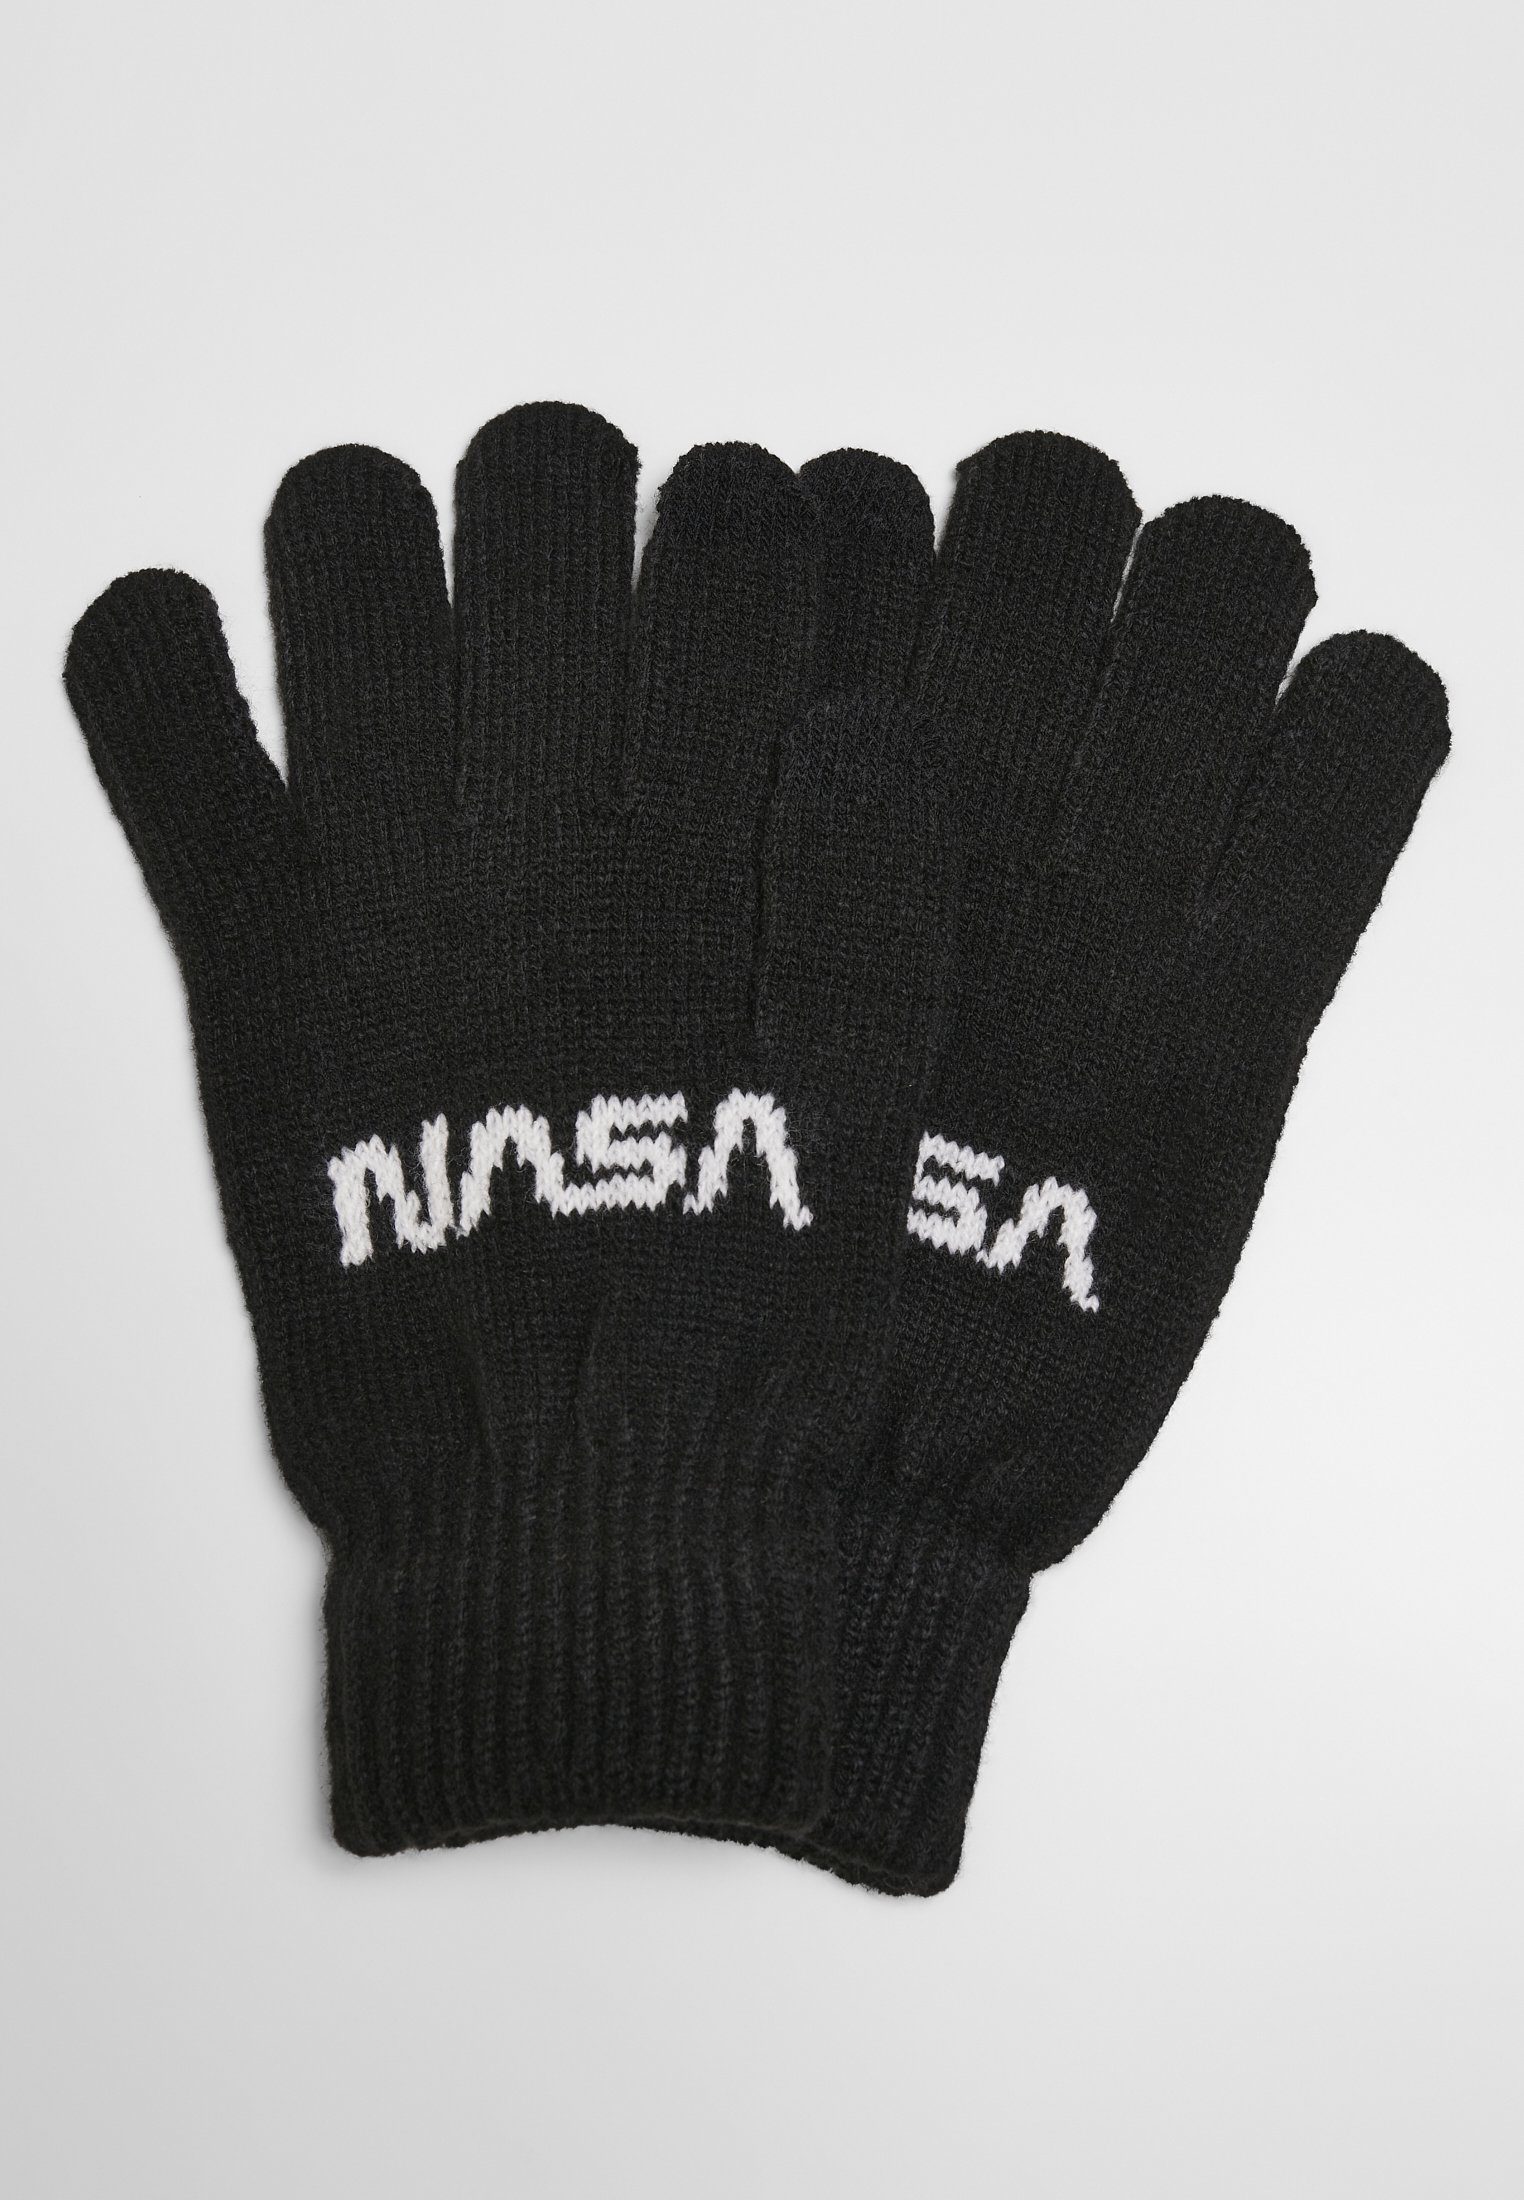 NASA Tee MisterTee Knit Glove Mister Accessoires Baumwollhandschuhe